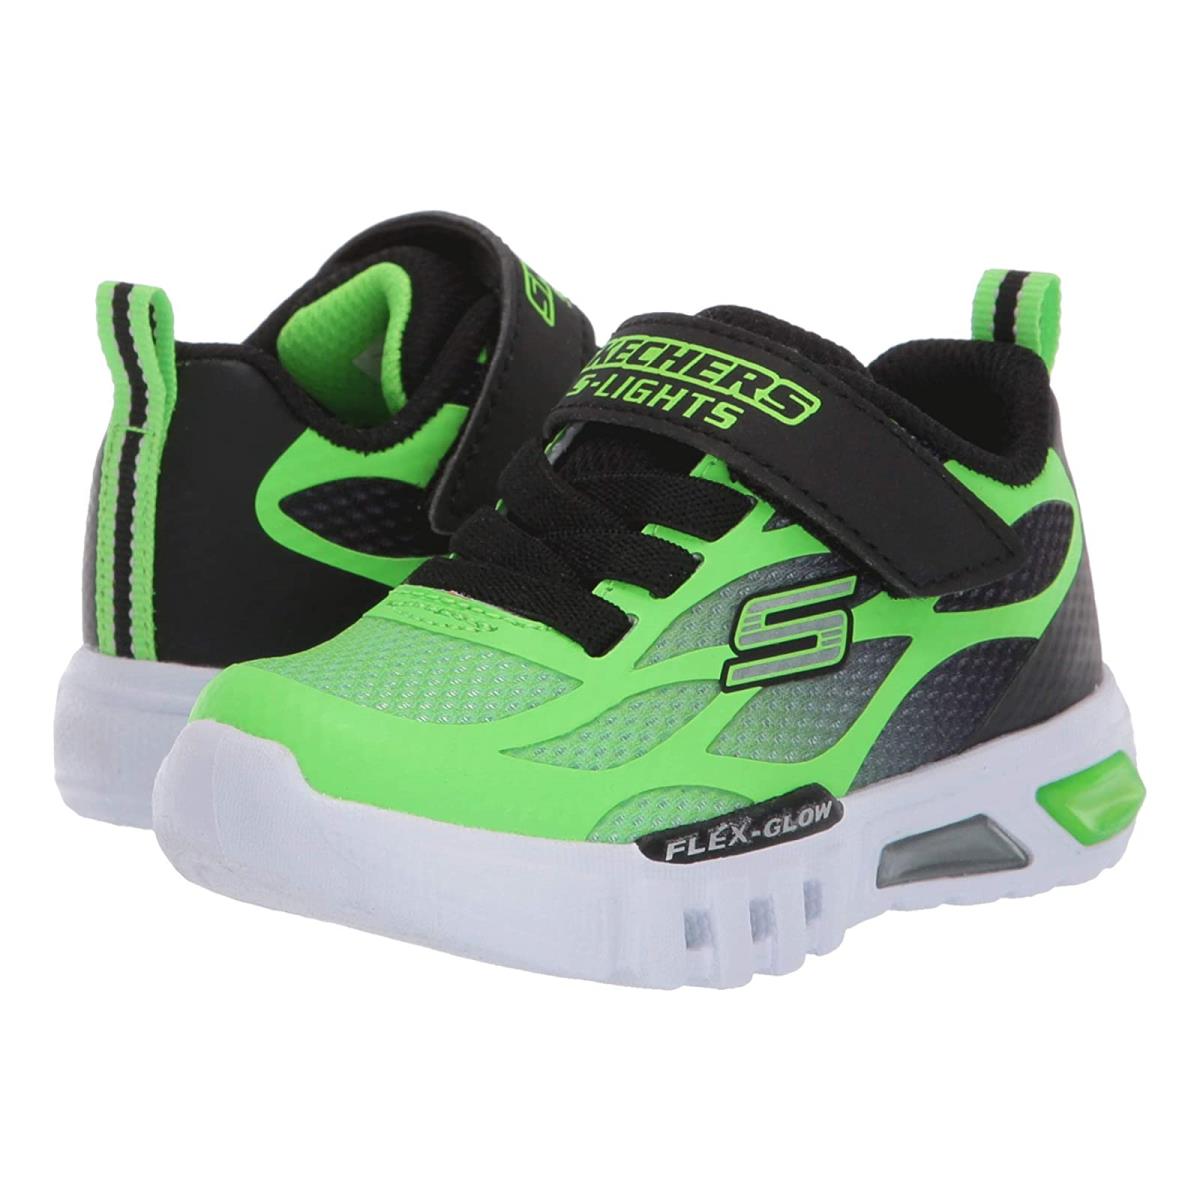 Boy`s Shoes Skechers Kids Sport Lighted - Flex-glow 400016N Toddler Lime/Black